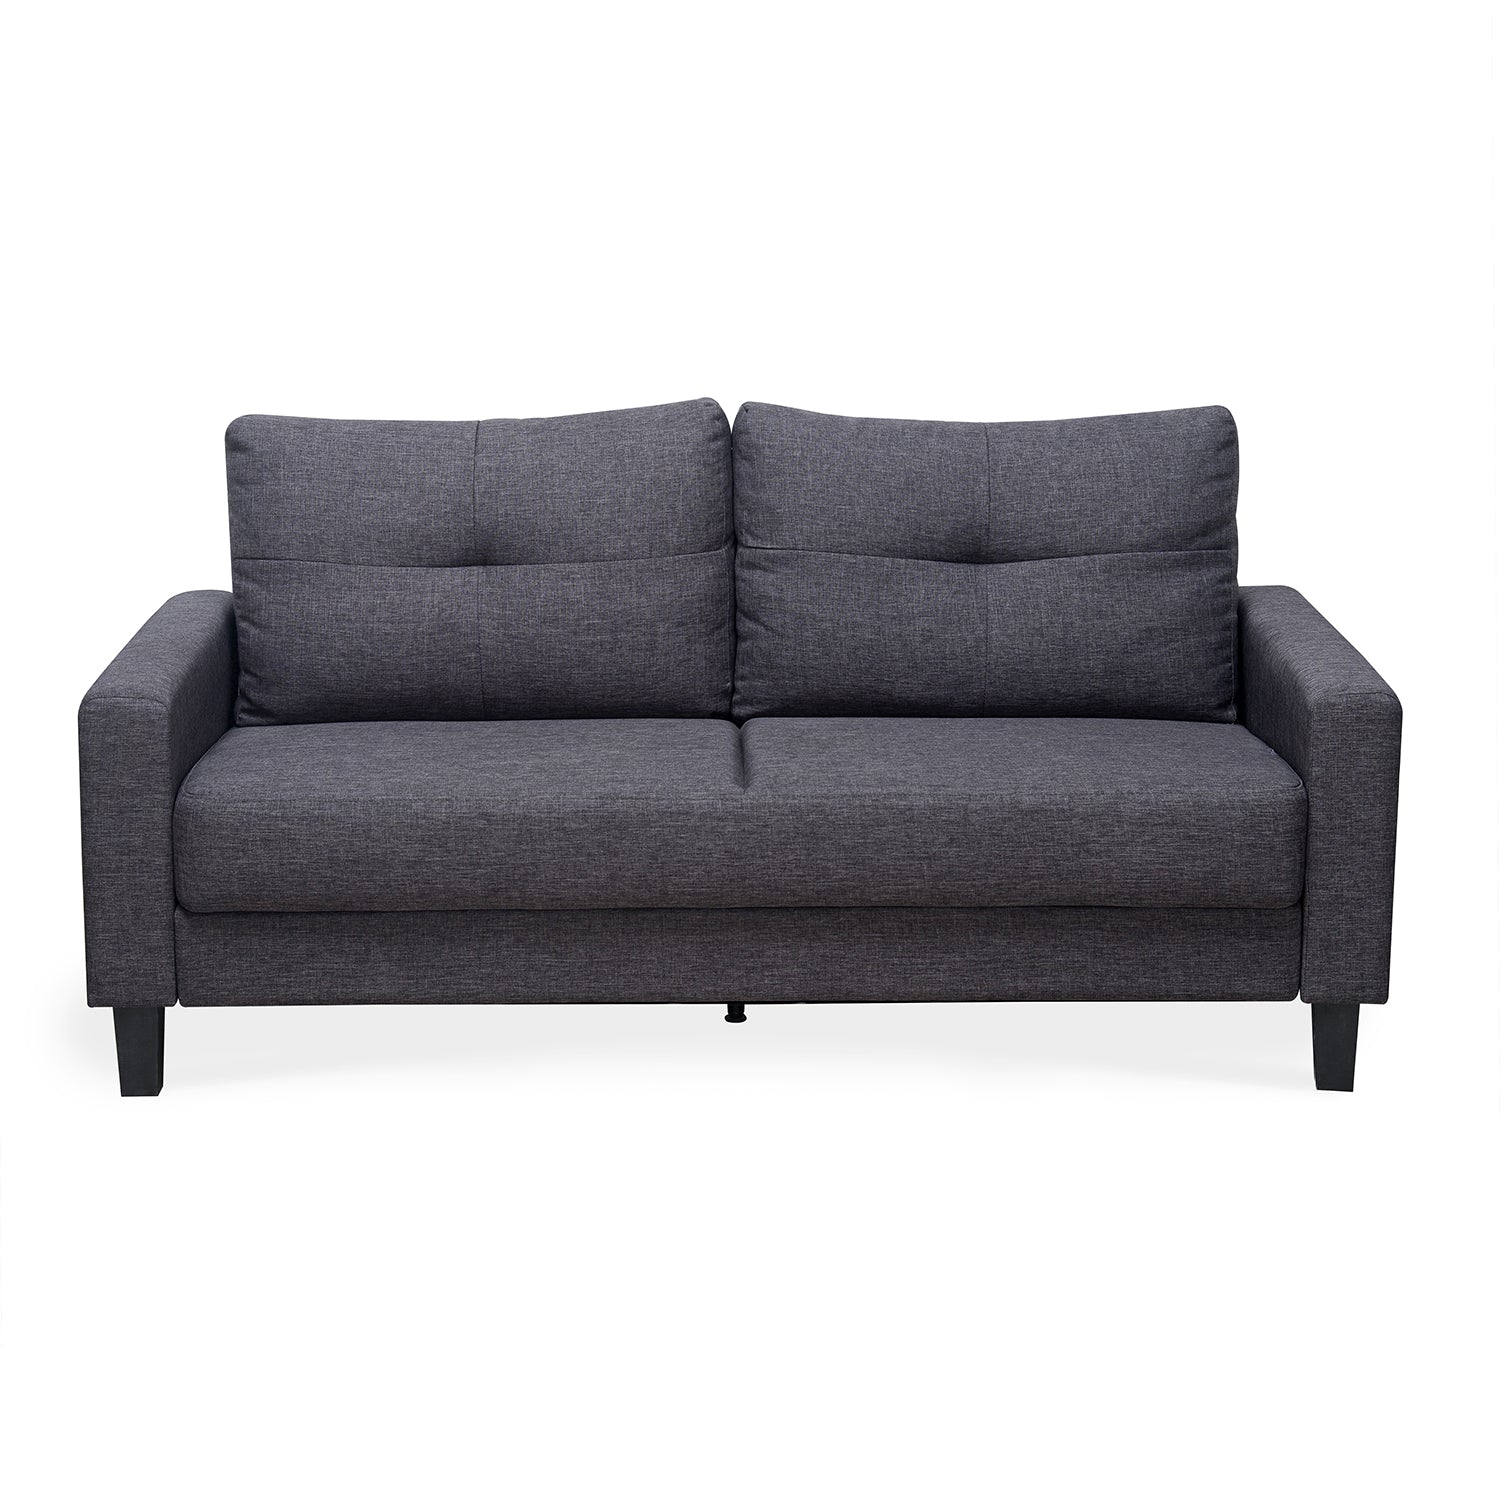 Parry 3 Seater Sofa (Grey)